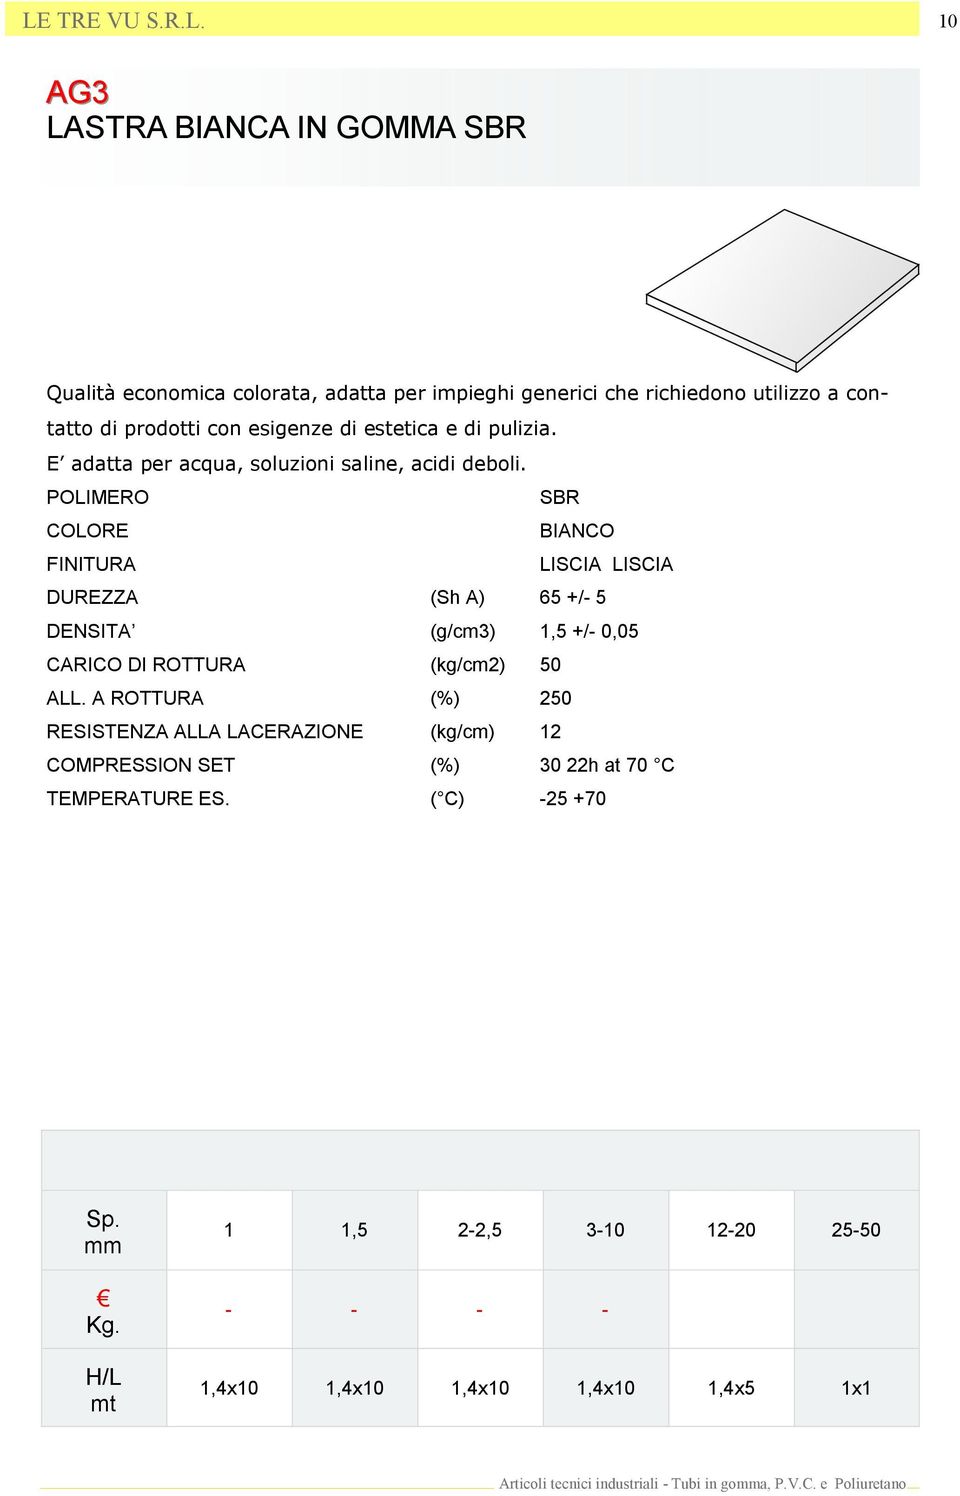 SBR BIANCO LISCIA LISCIA DUREZZA (Sh A) 65 +/- 5 DENSITA (g/cm3) 1,5 +/- 0,05 CARICO DI ROTTURA (kg/cm2) 50 ALL.